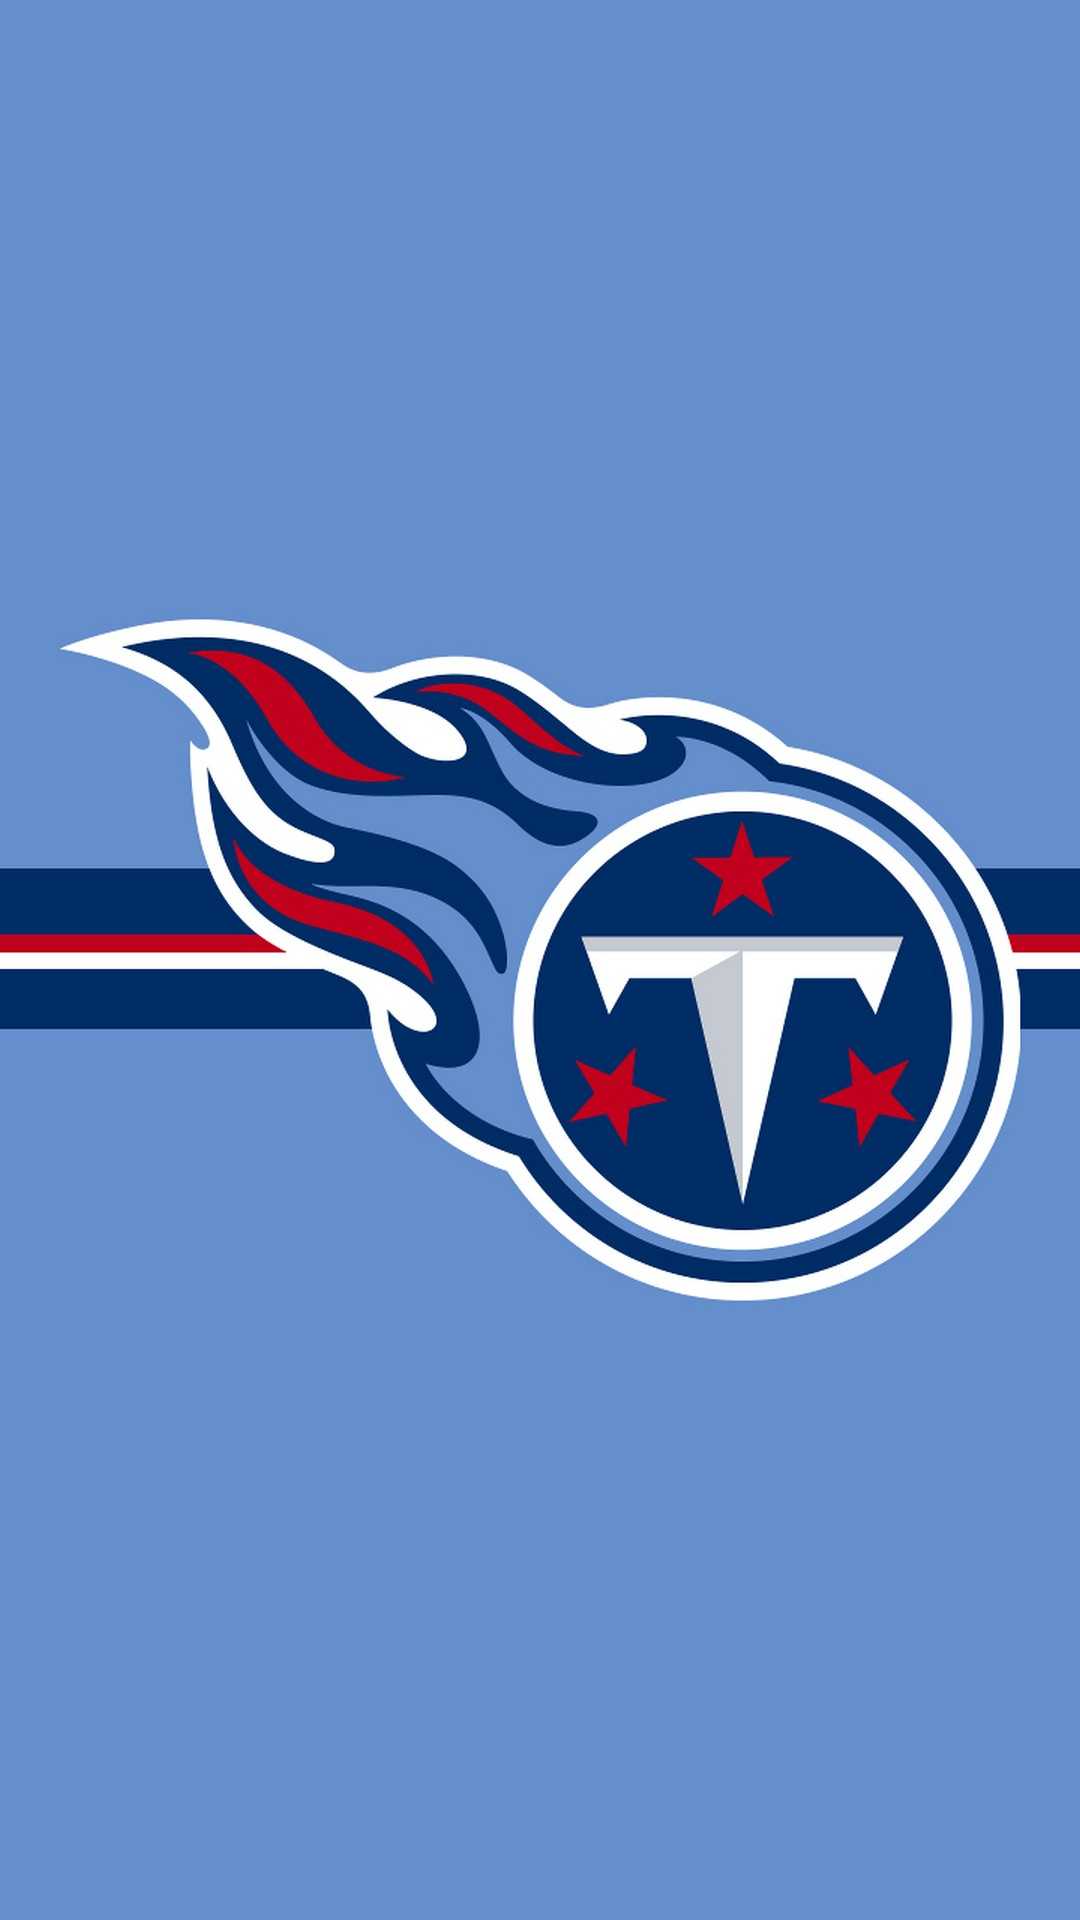 Tennessee Titans Wallpaper - iXpap